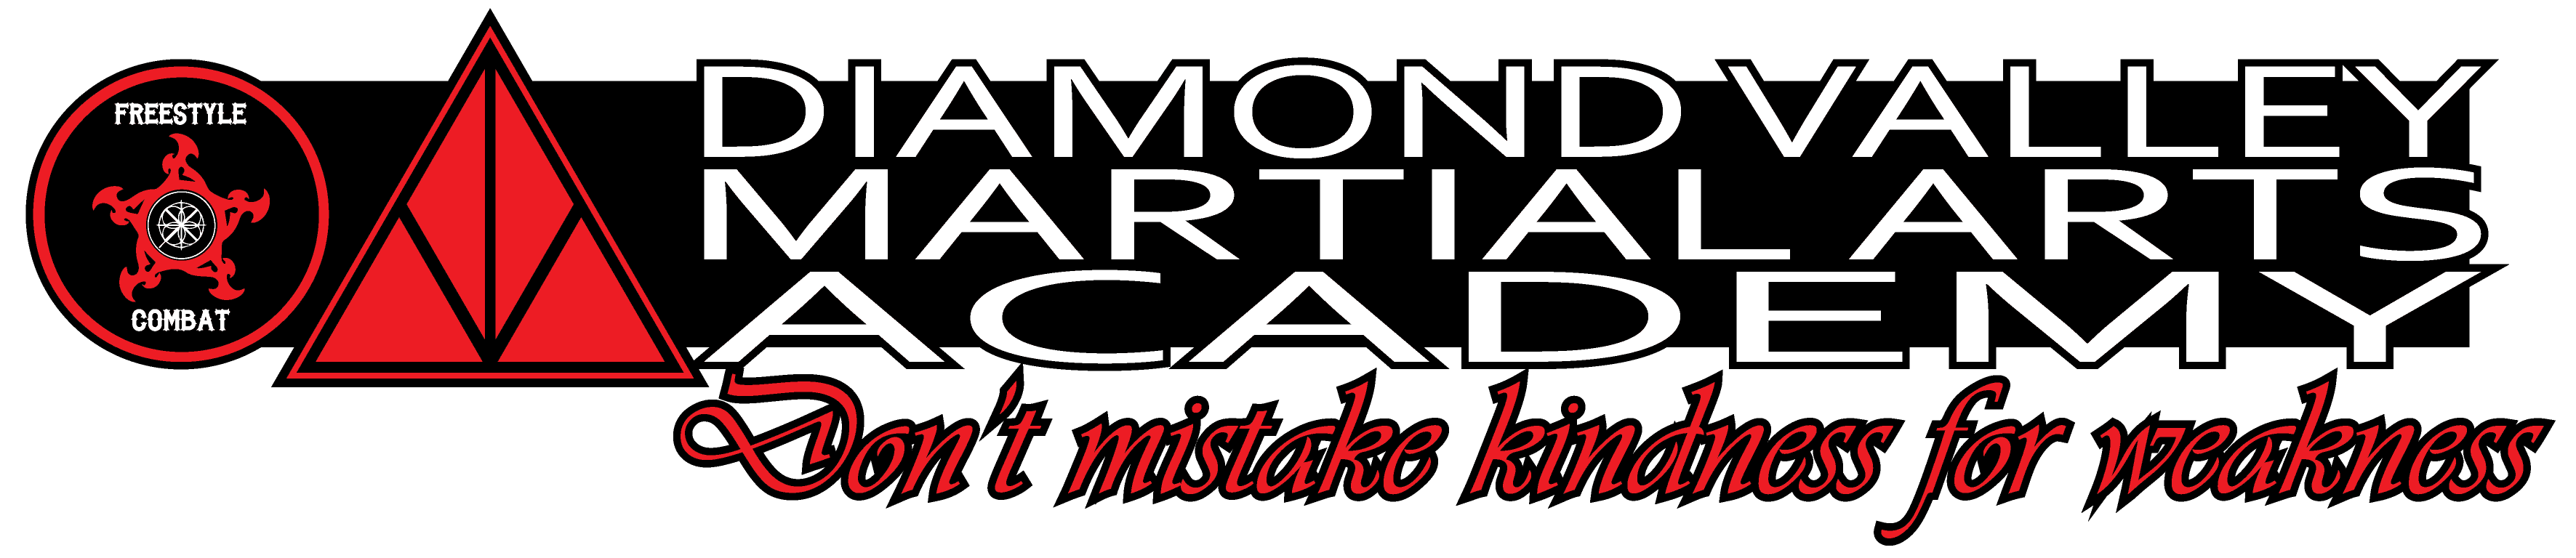 Diamond Valley Martial Arts Academy